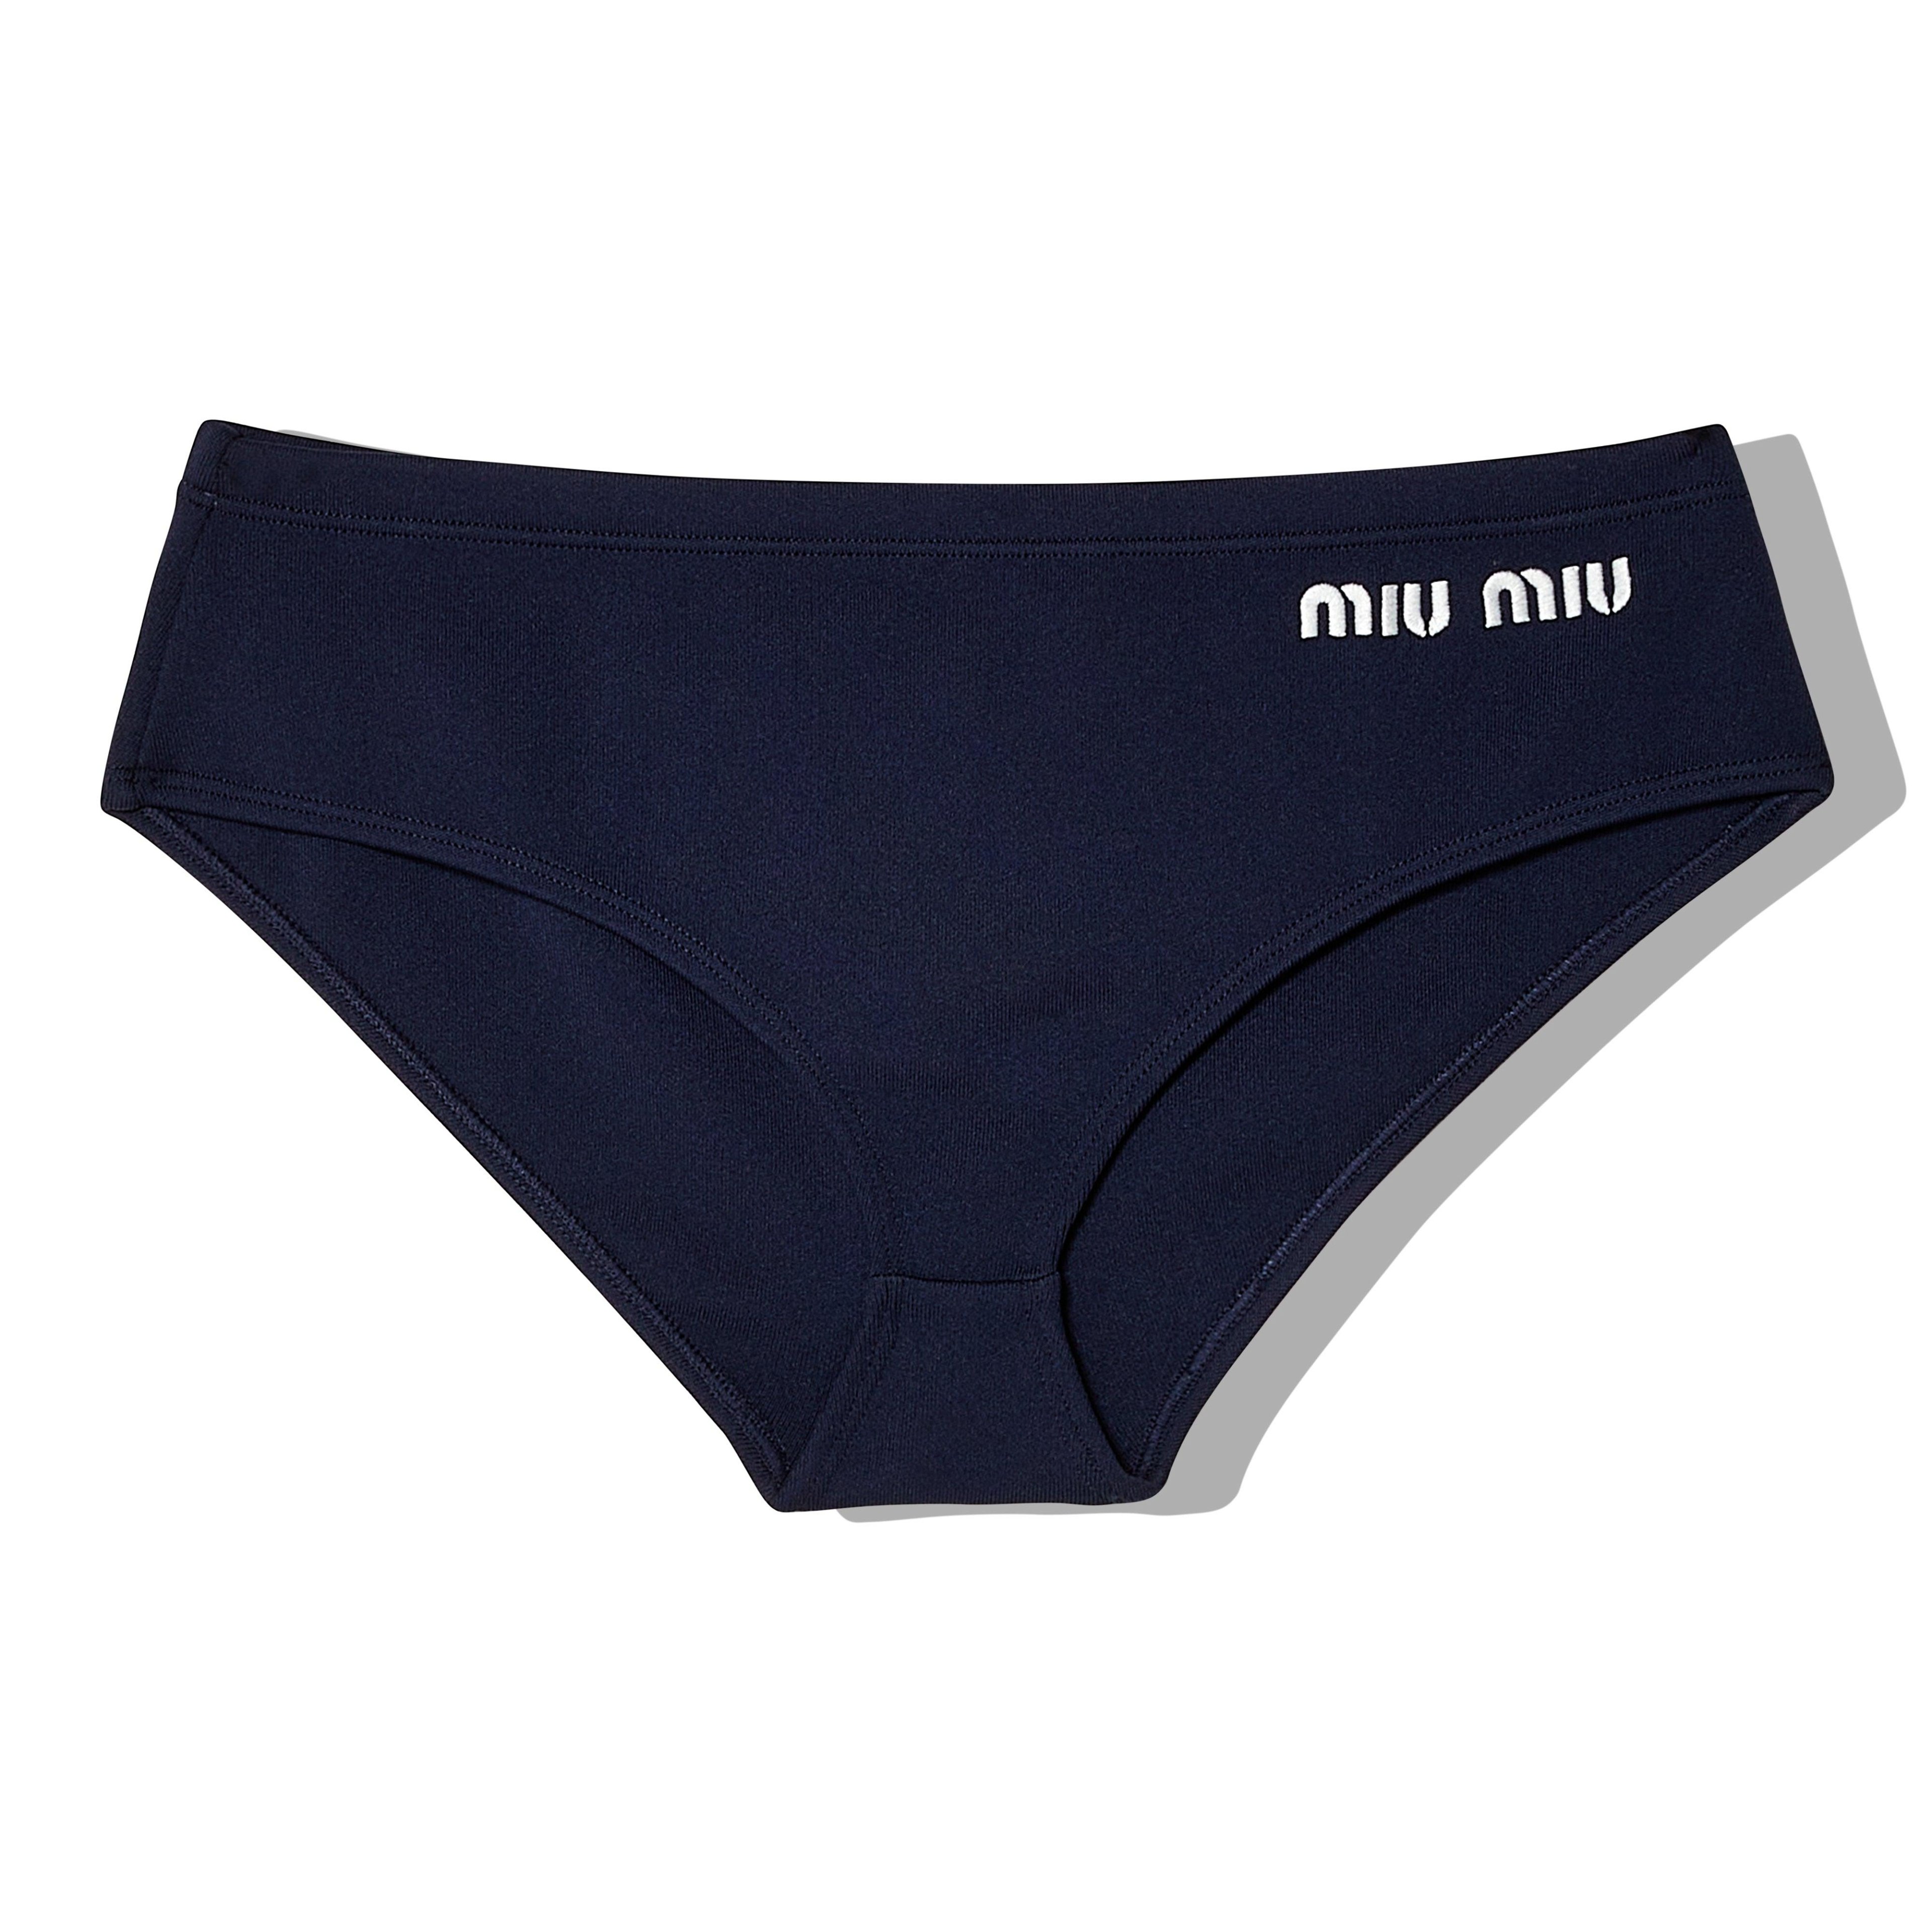 Miu Miu - Women's Swimsuit Bottoms - (Navy) by MIU MIU